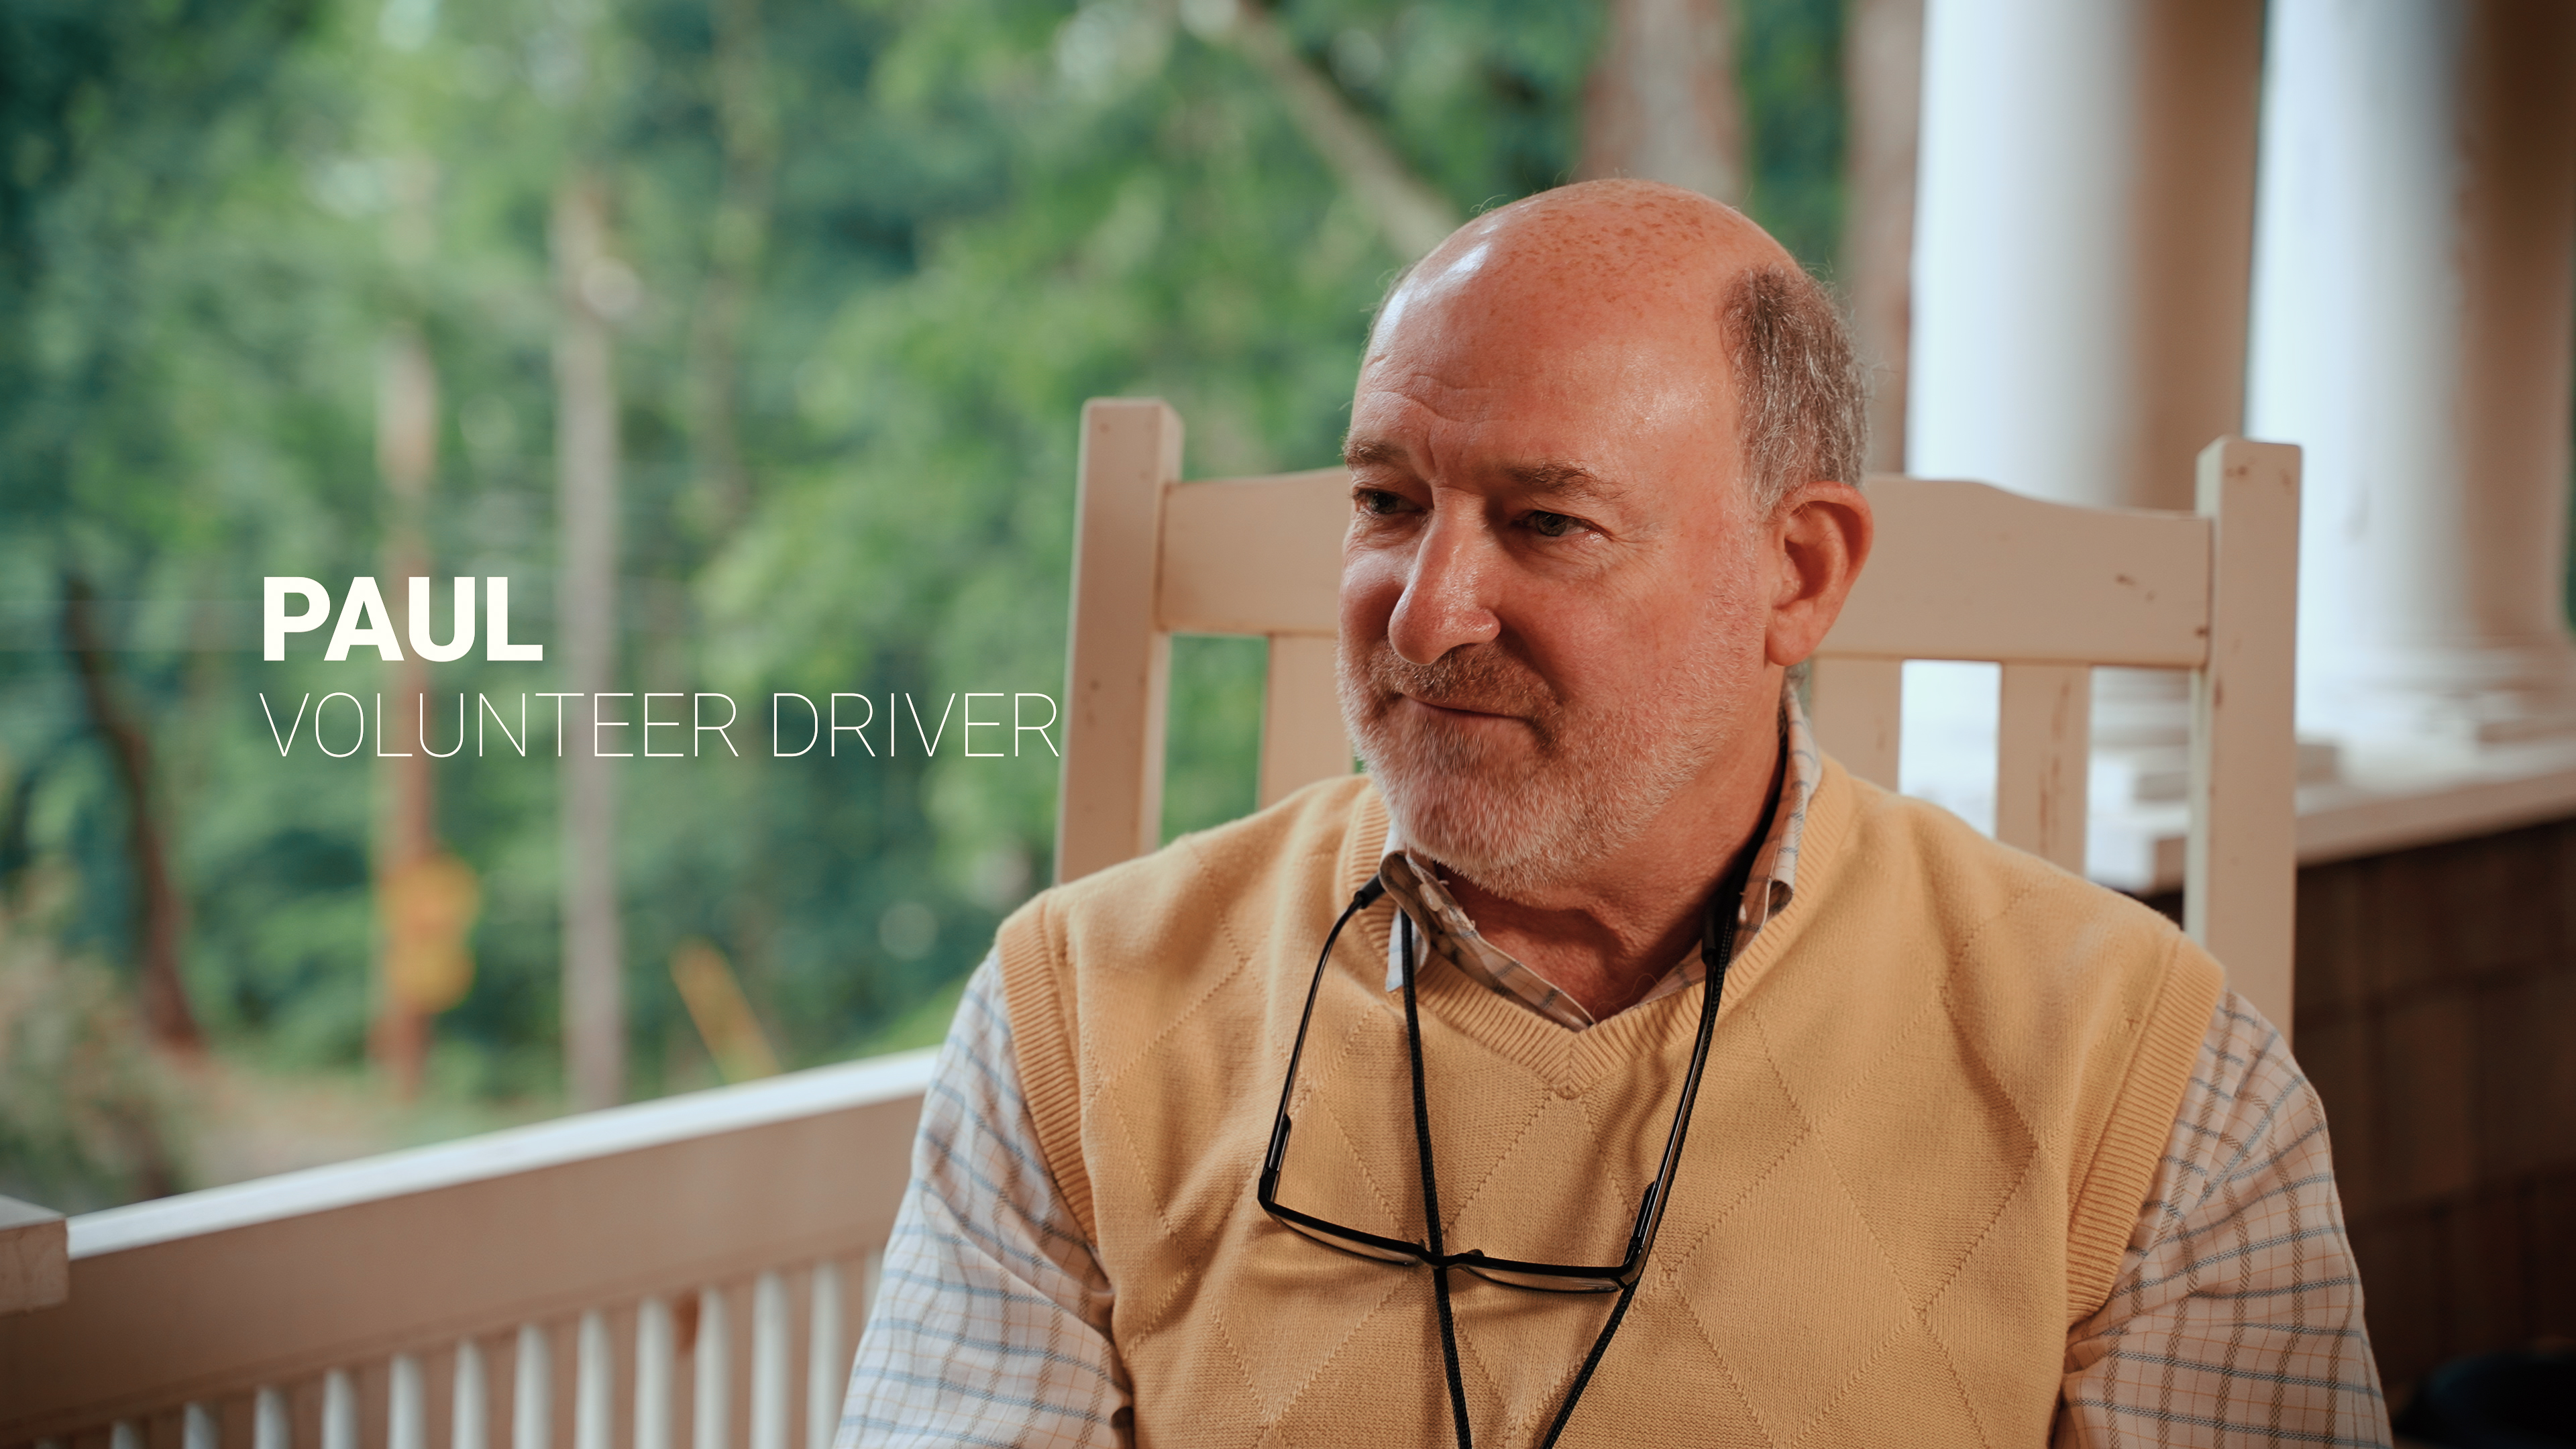 The New Hampshire Volunteer Driver Program